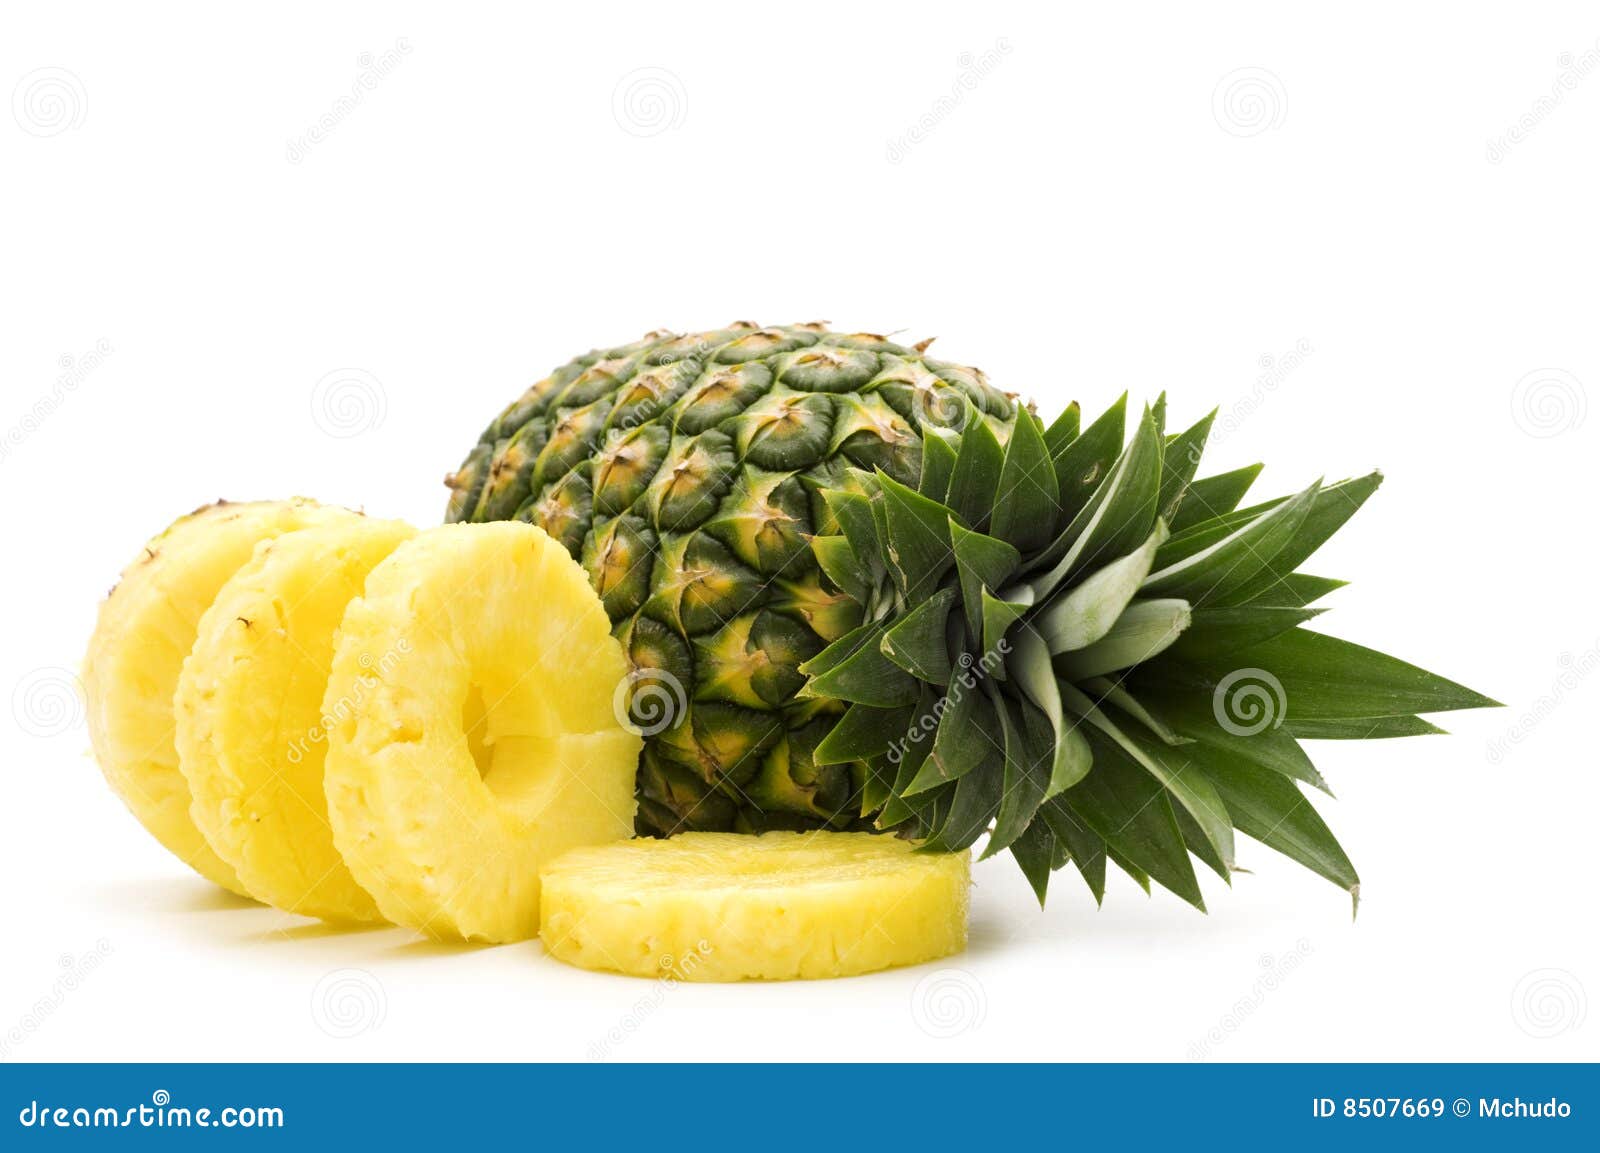 fresh slice pineapple